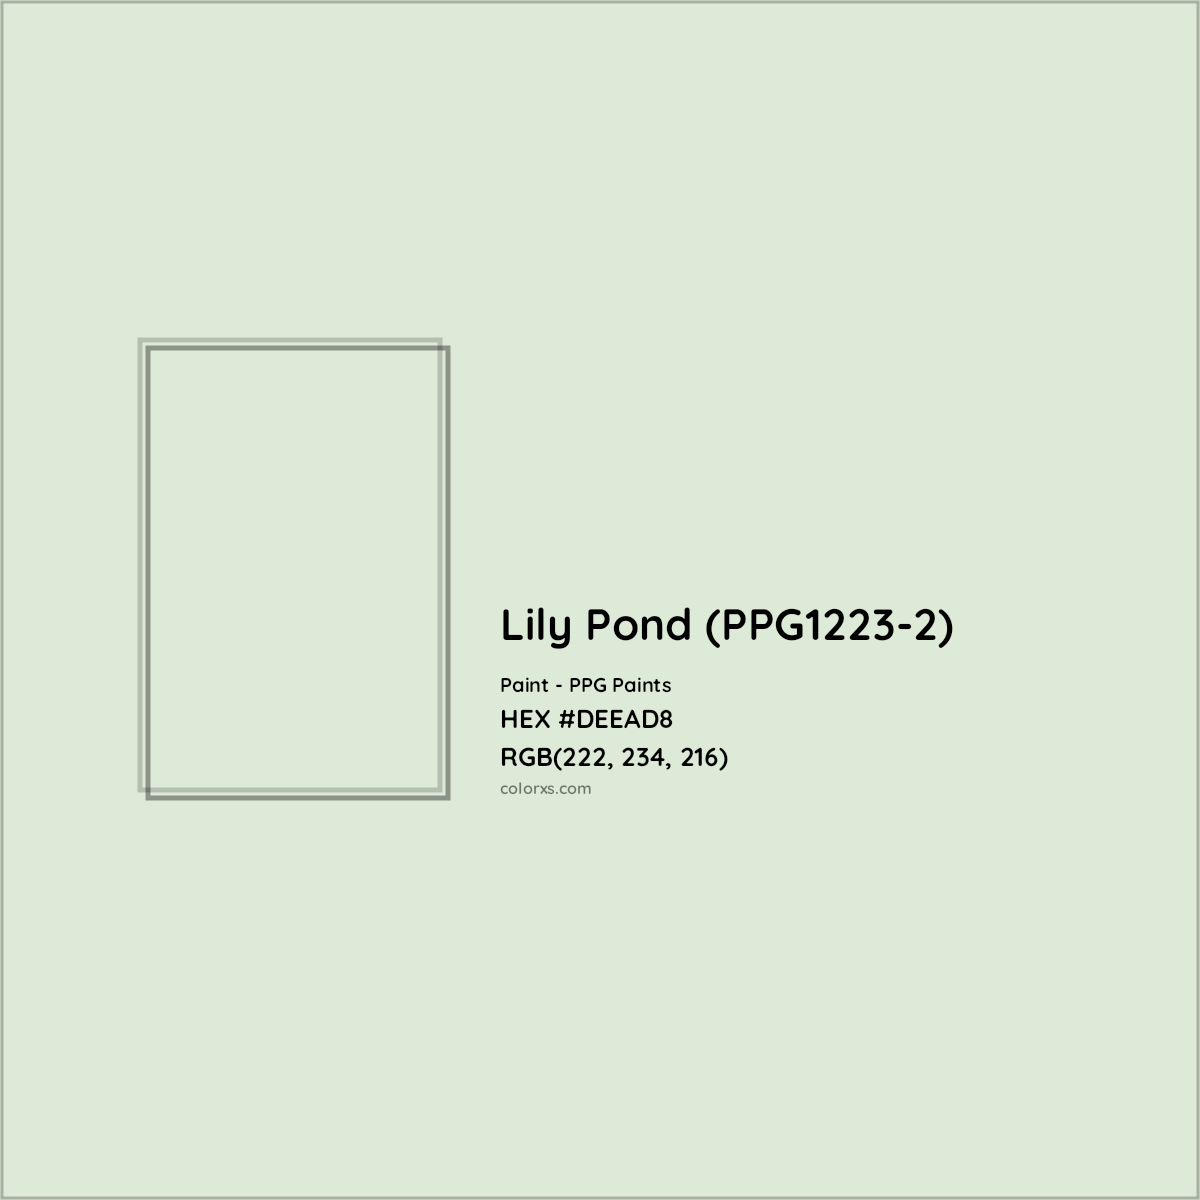 HEX #DEEAD8 Lily Pond (PPG1223-2) Paint PPG Paints - Color Code